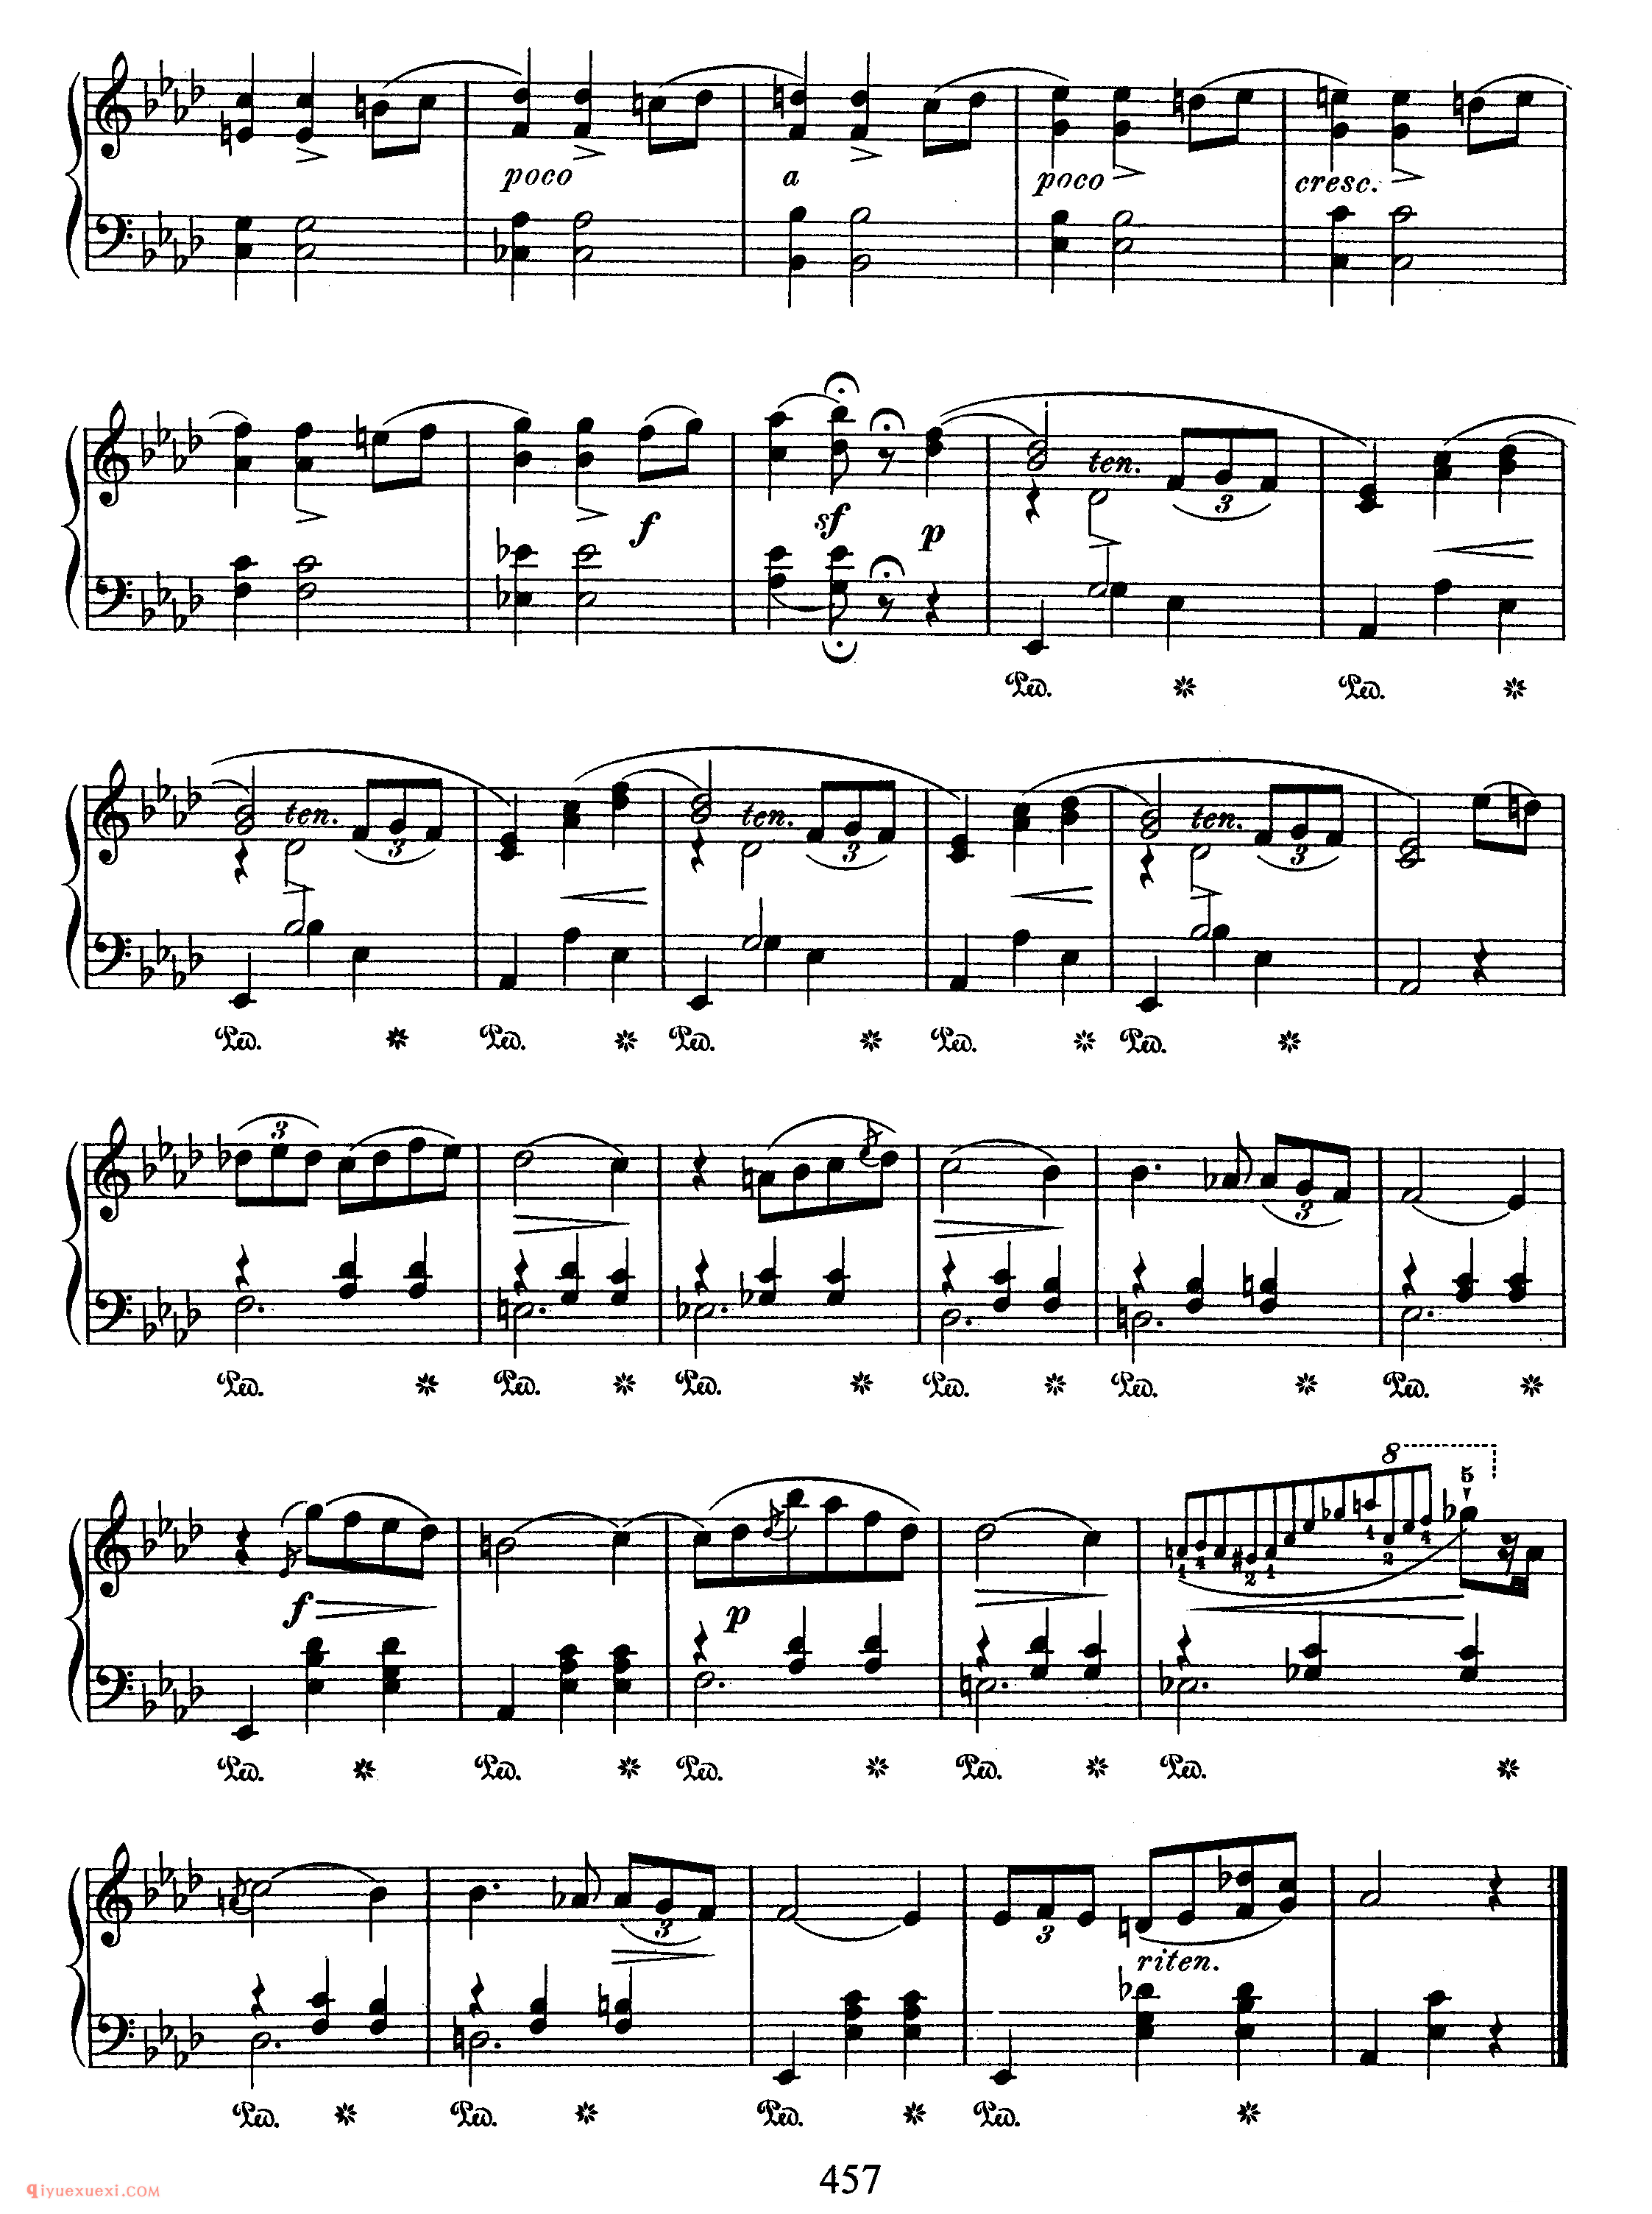 2 Waltzes, Op 69 降A大调/b小调_肖邦圆舞曲钢琴谱